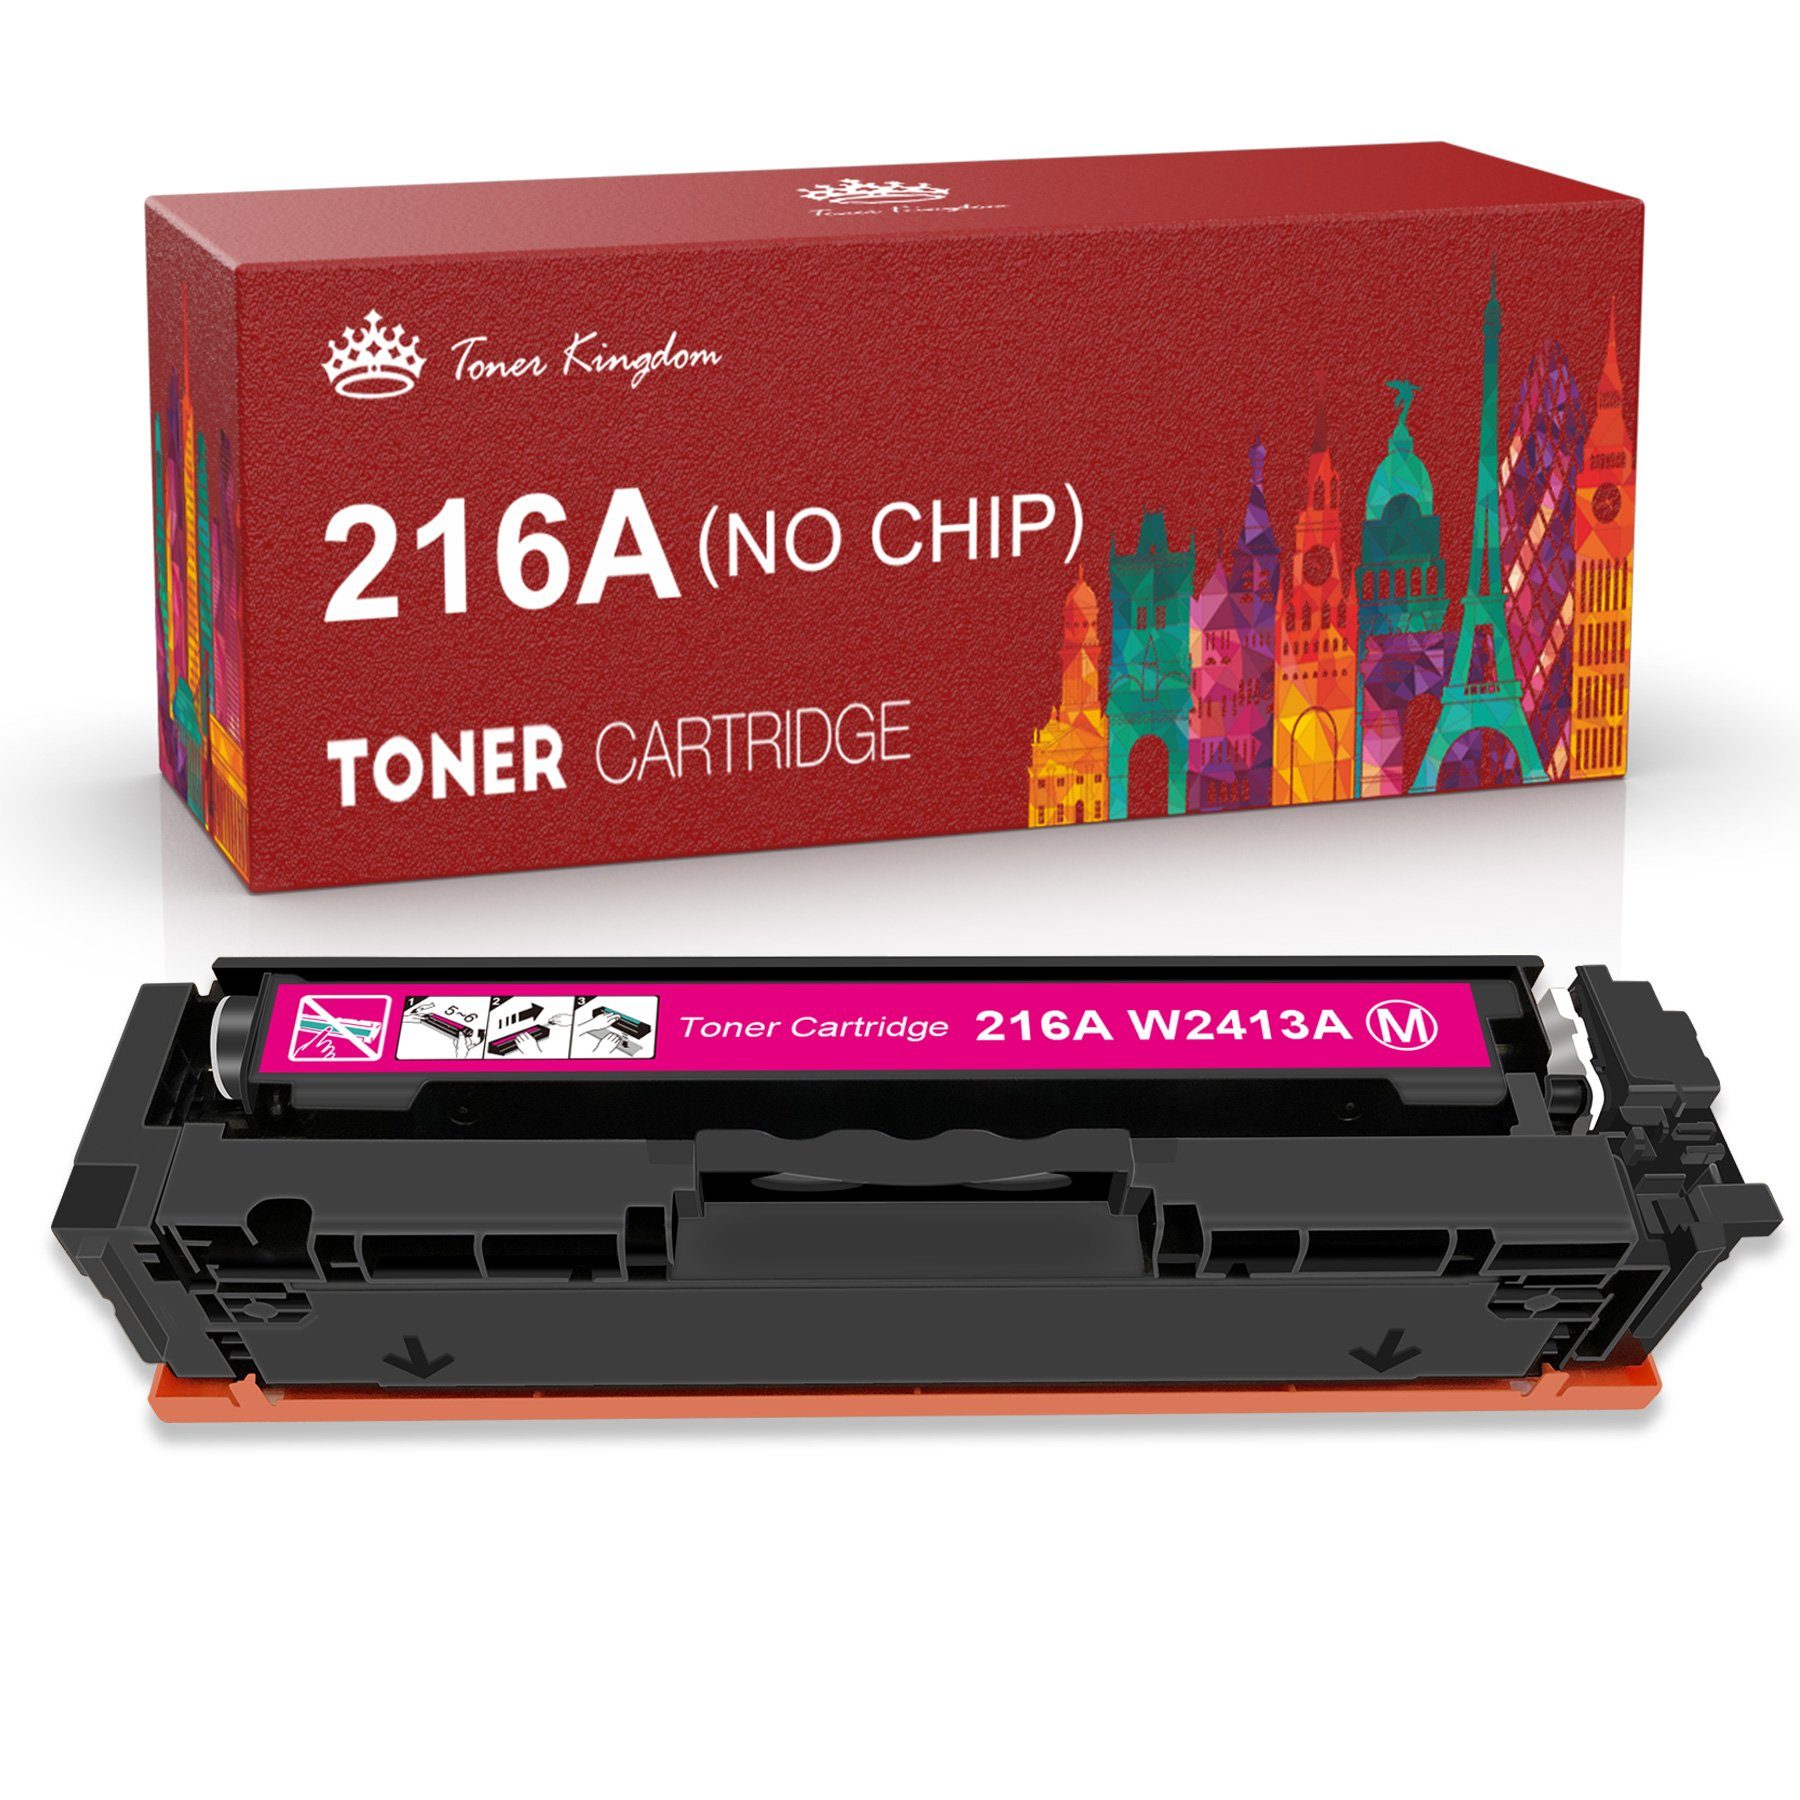 Toner Kingdom Tonerpatrone für HP 216A Ersatz 216 A HP216A HP216 Color Magenta